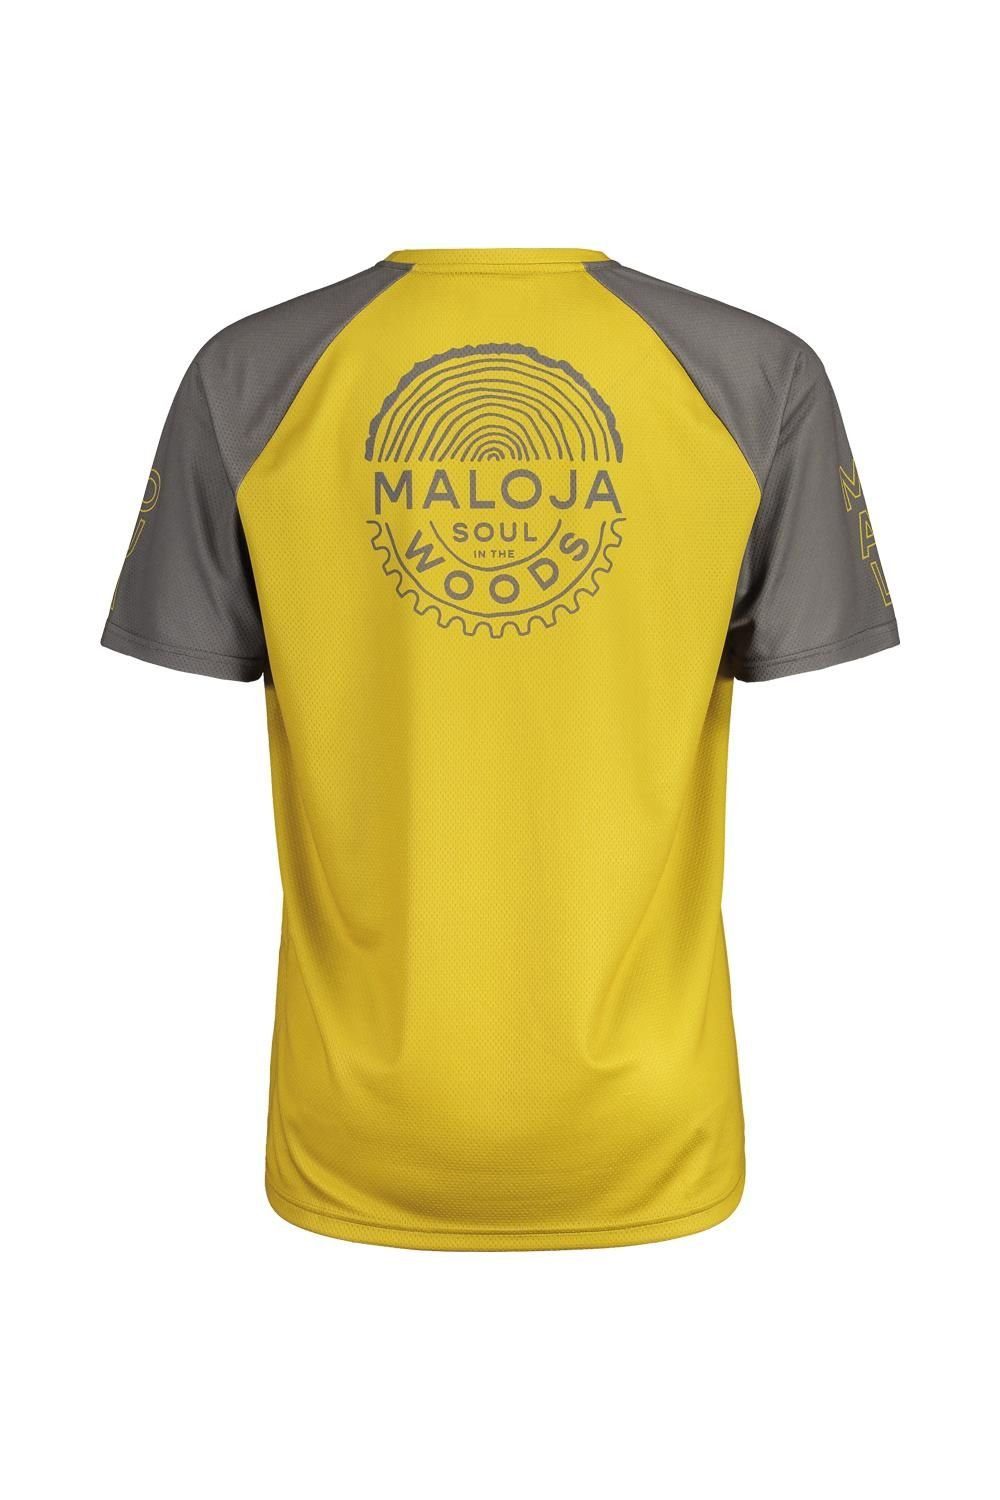 Multisport Maloja Shirt StachelbeereM. Maloja Radtrikot Herren gelb